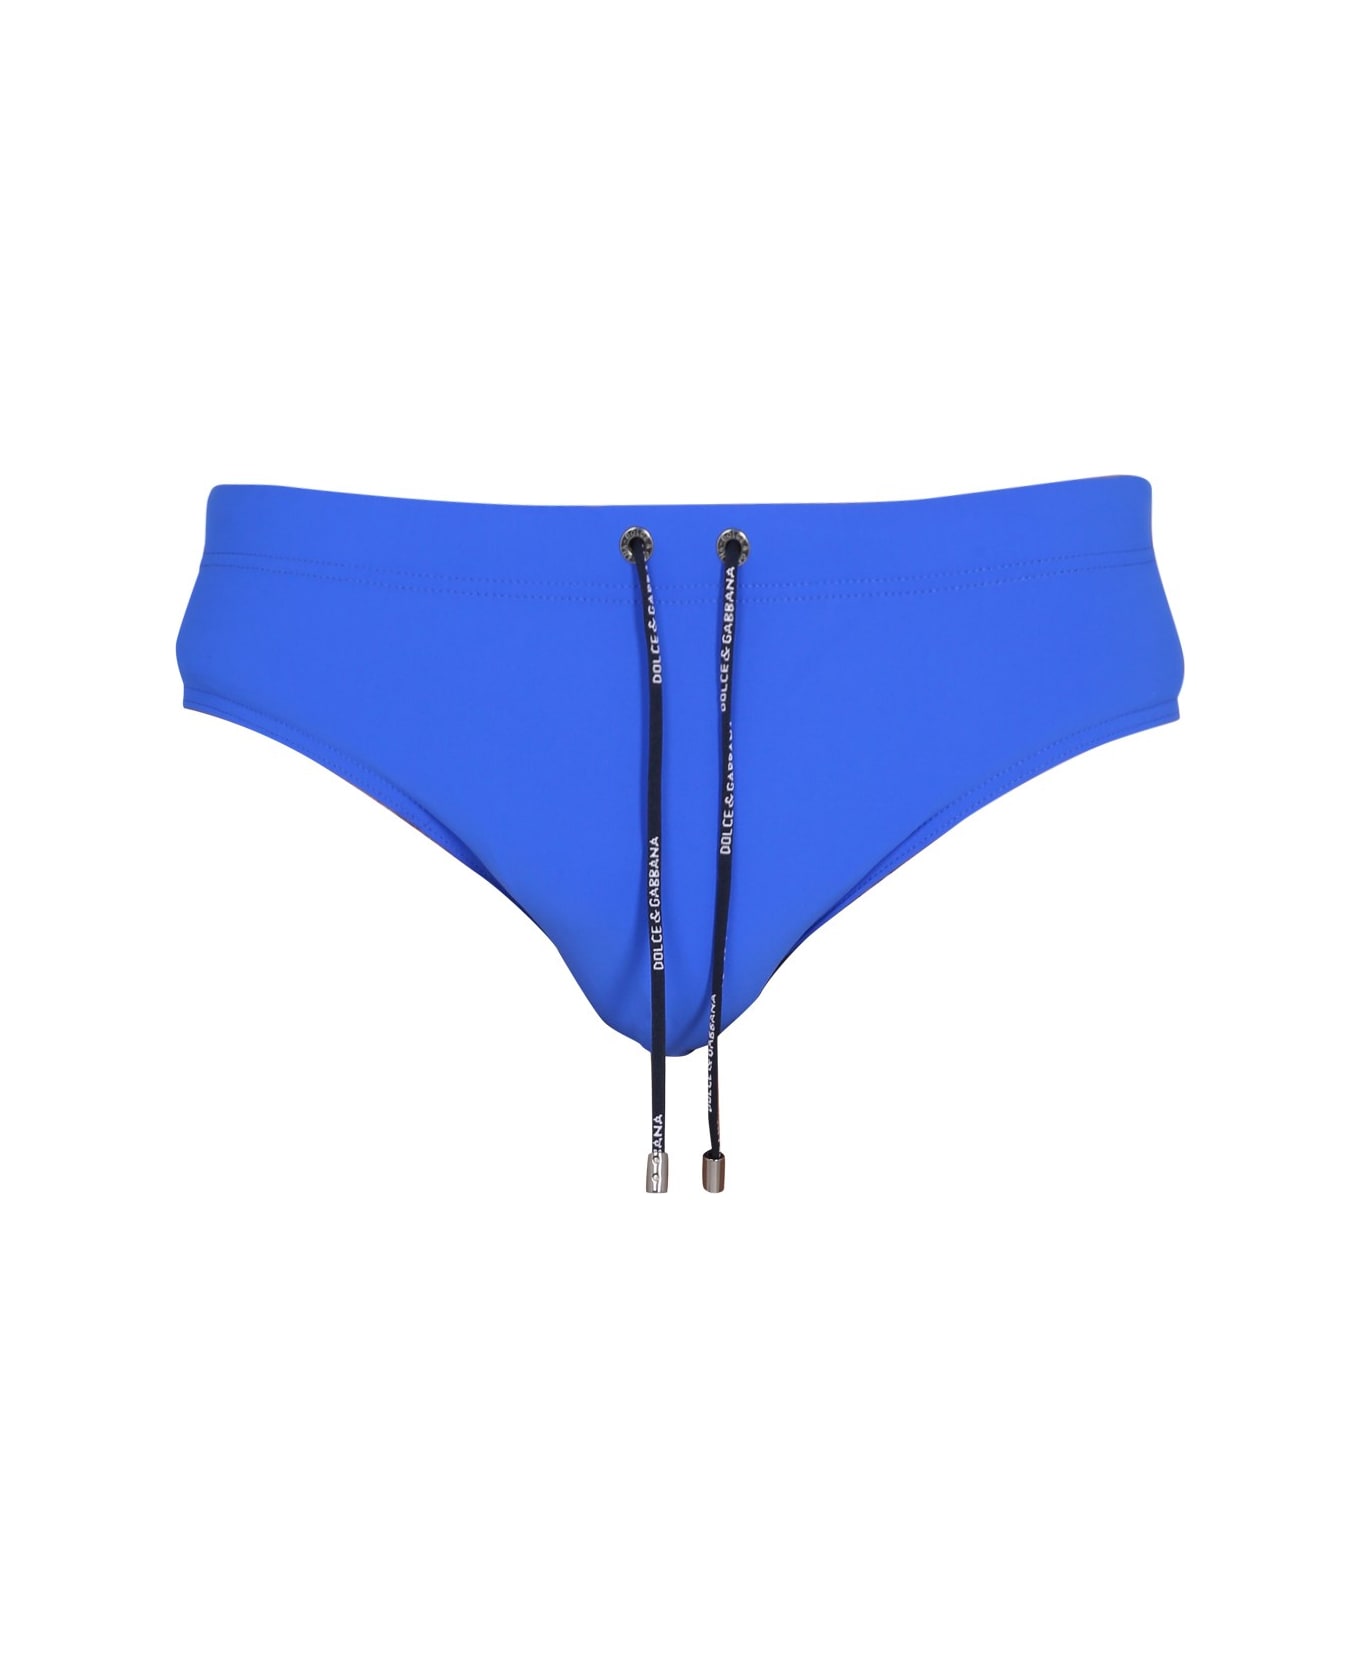 Dolce & Gabbana Swimsuit Briefs - Bluette